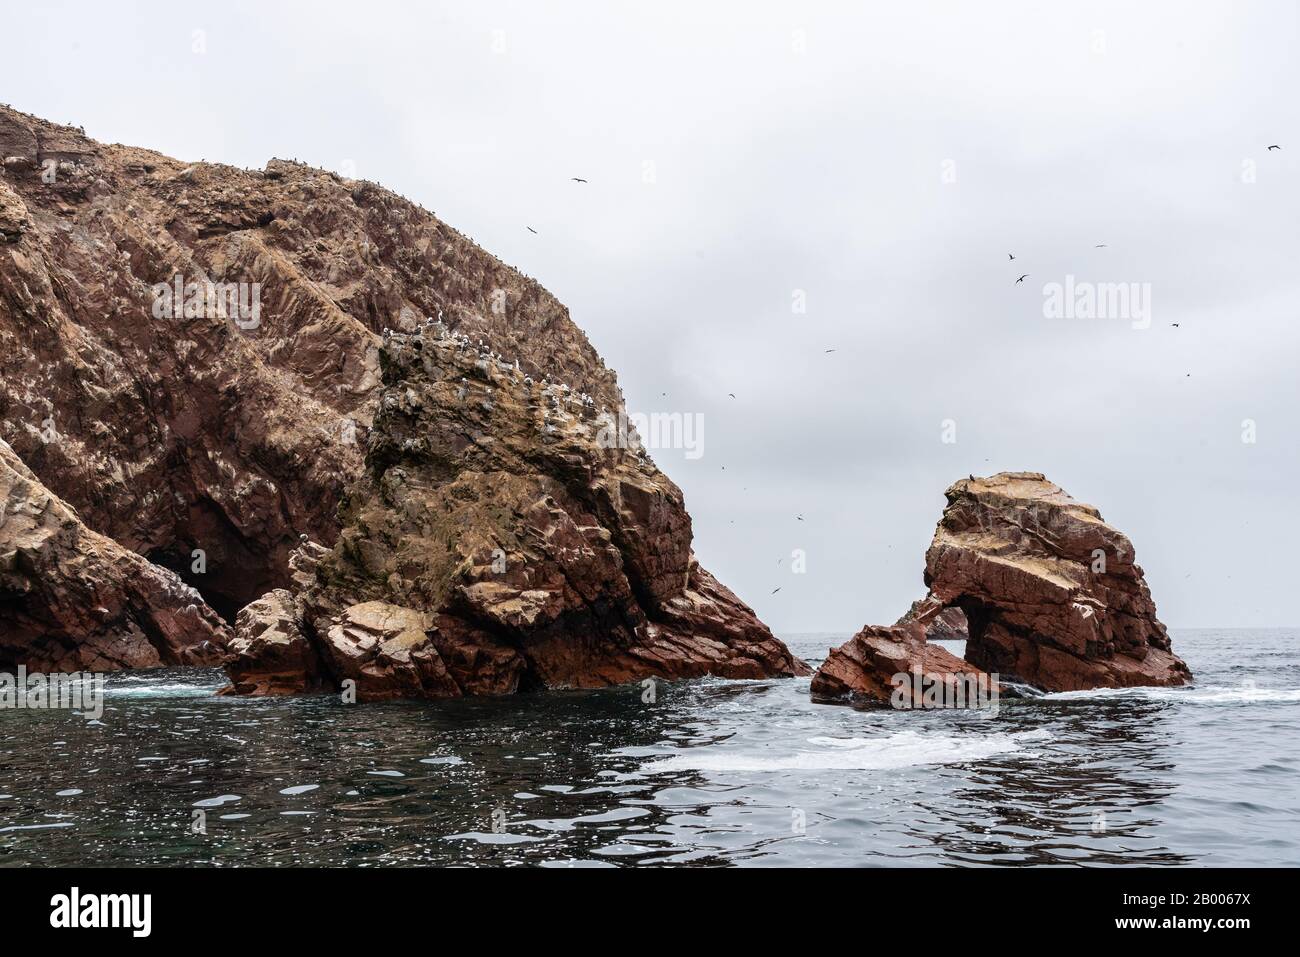 Sea lions enjoying nice weather at Ballestas Islands Peru South America Stock Photo